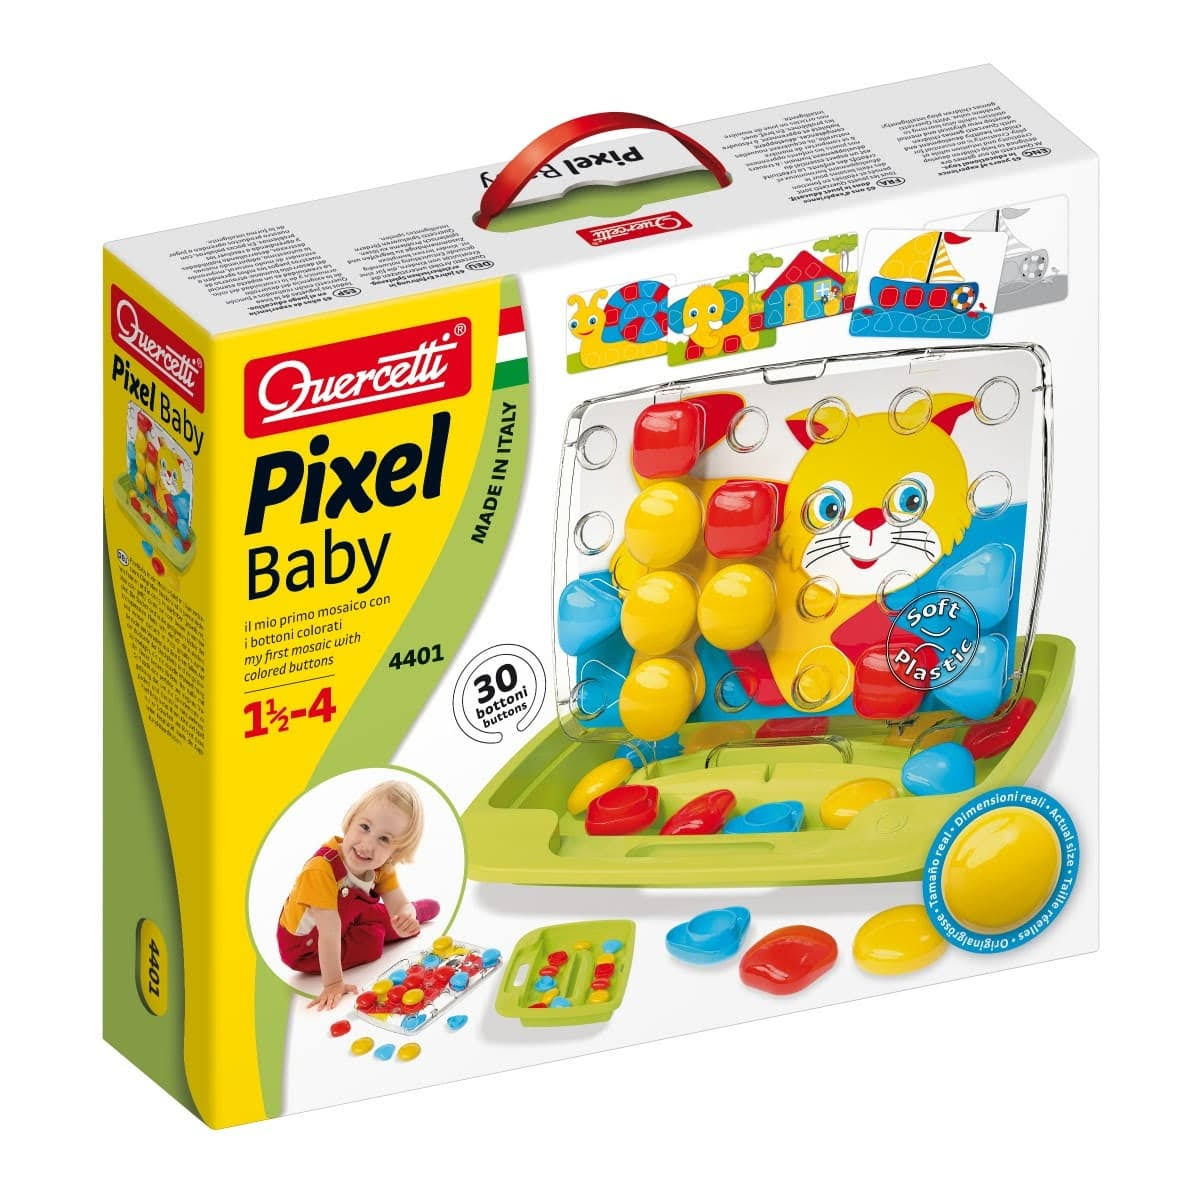 Quercetti Pixel Baby Art Activity Toy